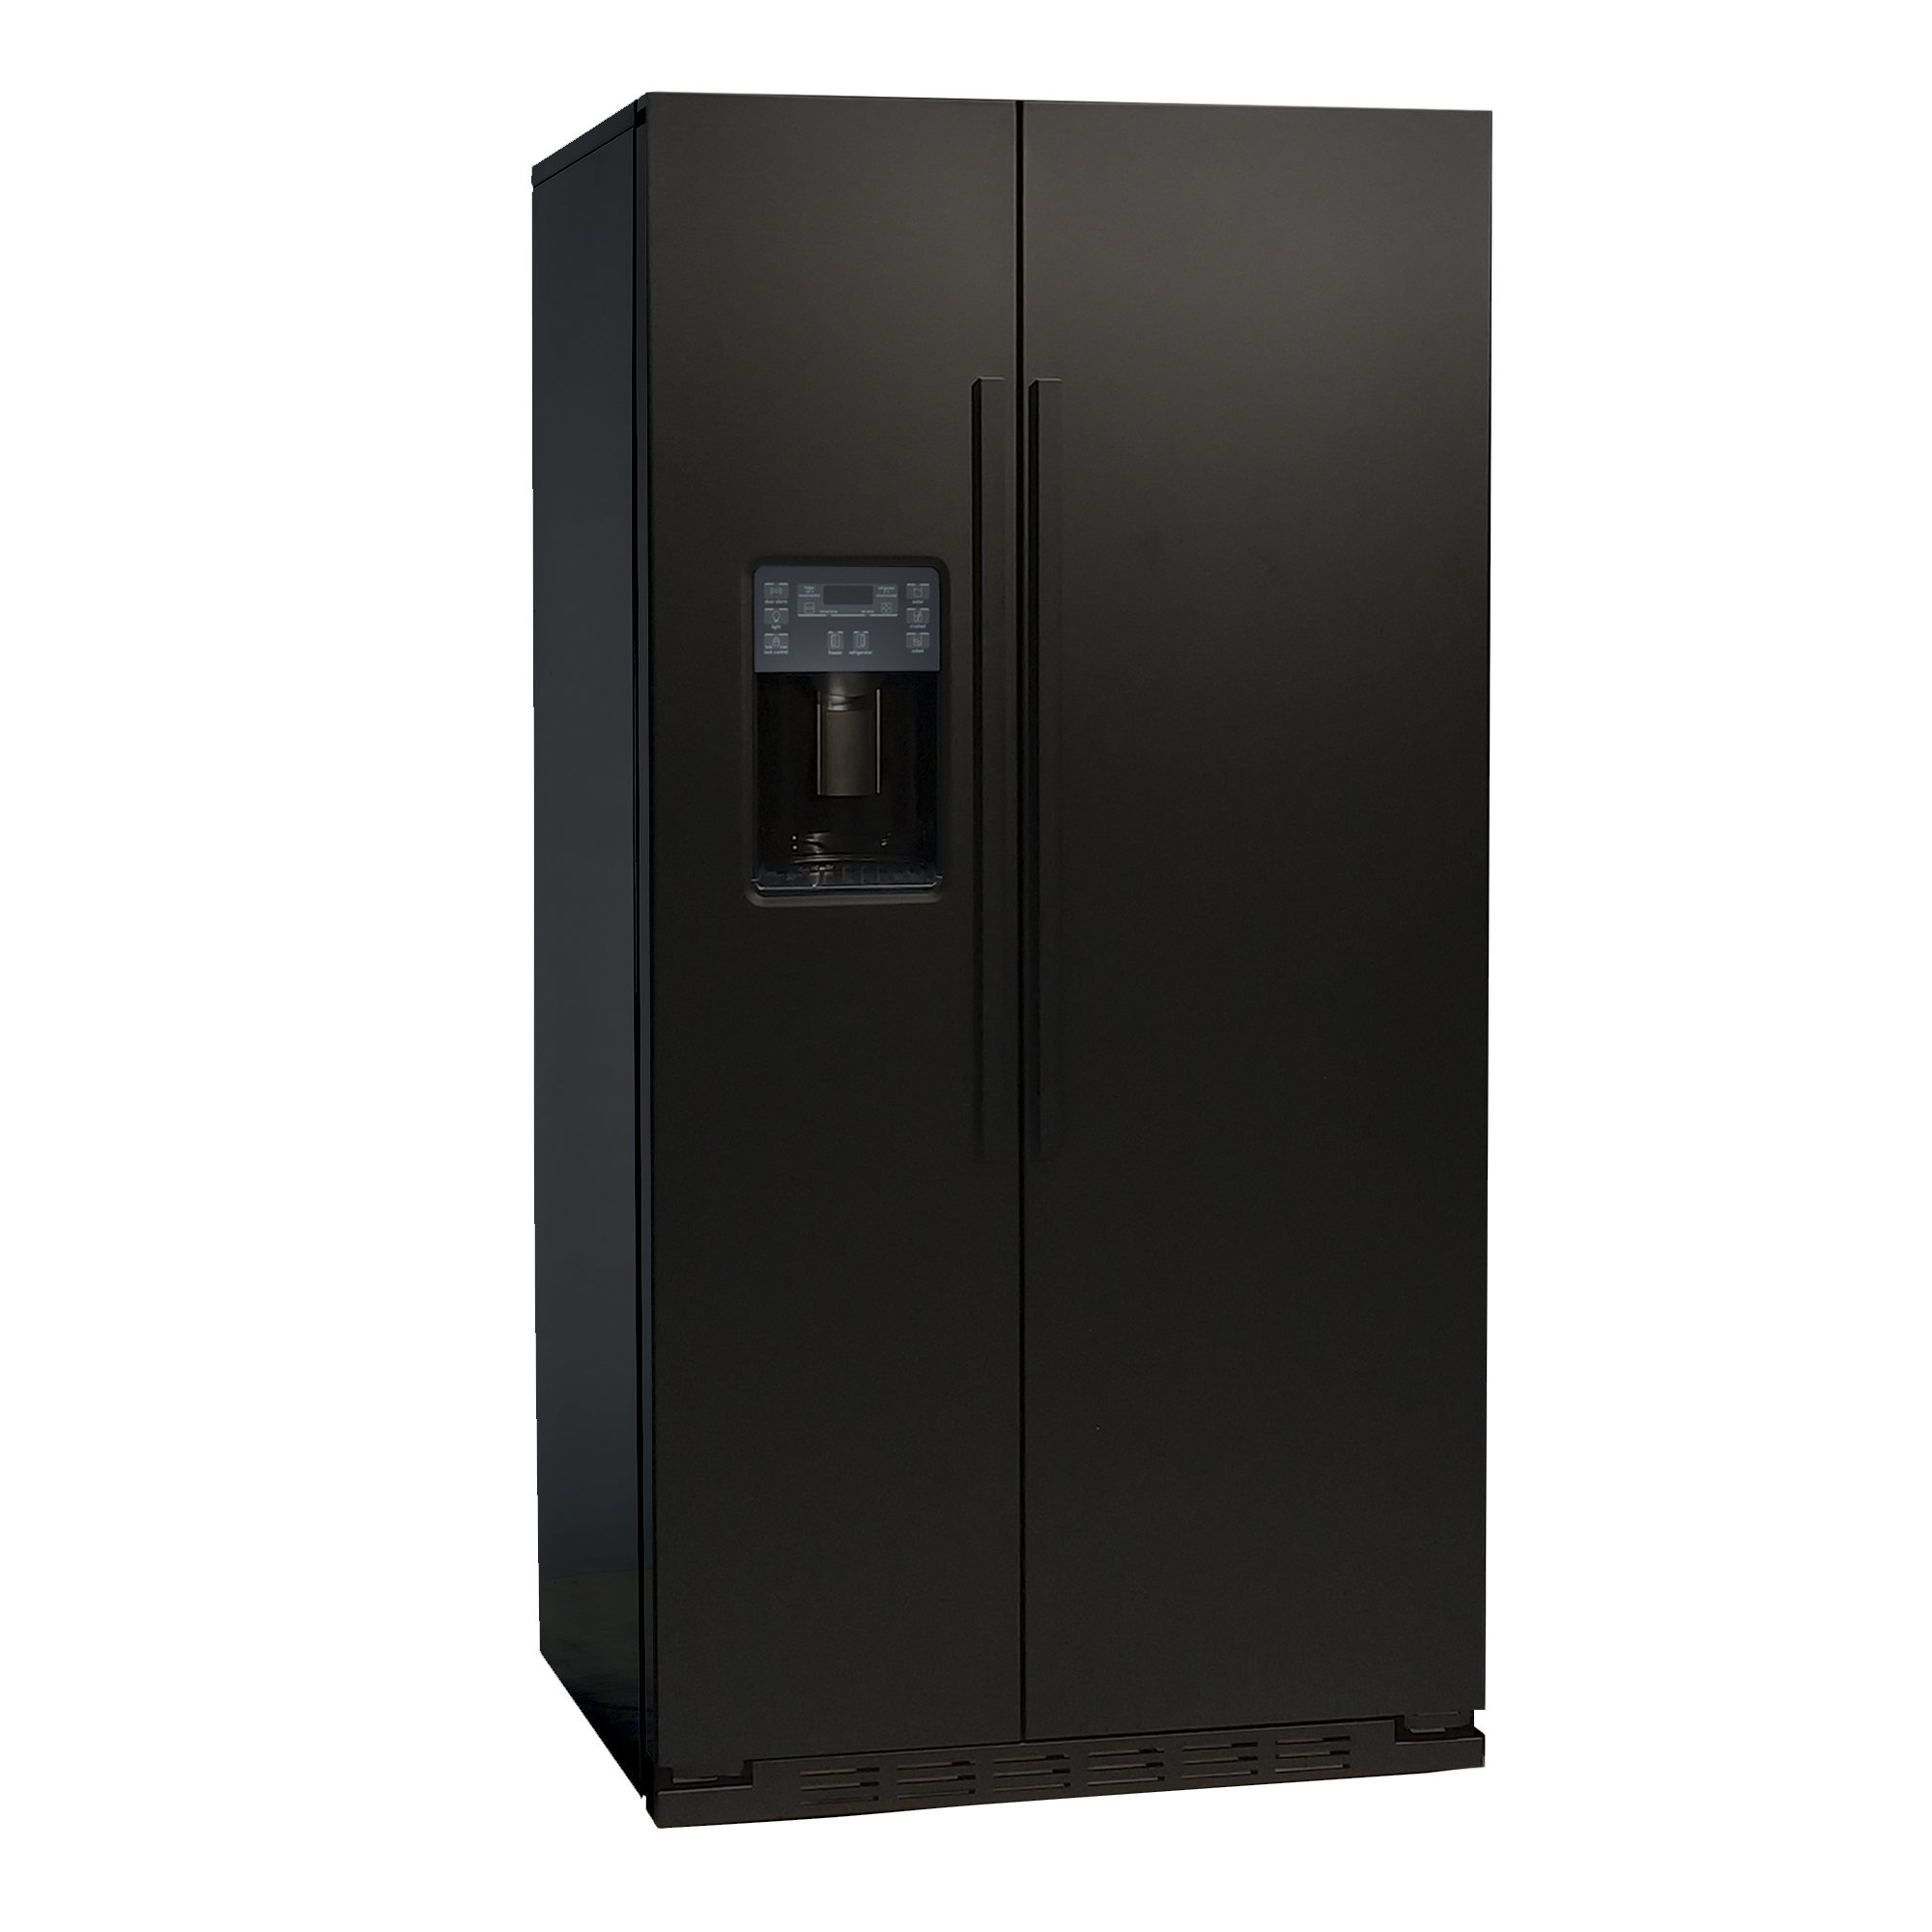 klei Wreedheid Bedrijf Amerikaanse koelkast in MAT zwart - koelkast-diepvriezer - keuken - WONEN.nl